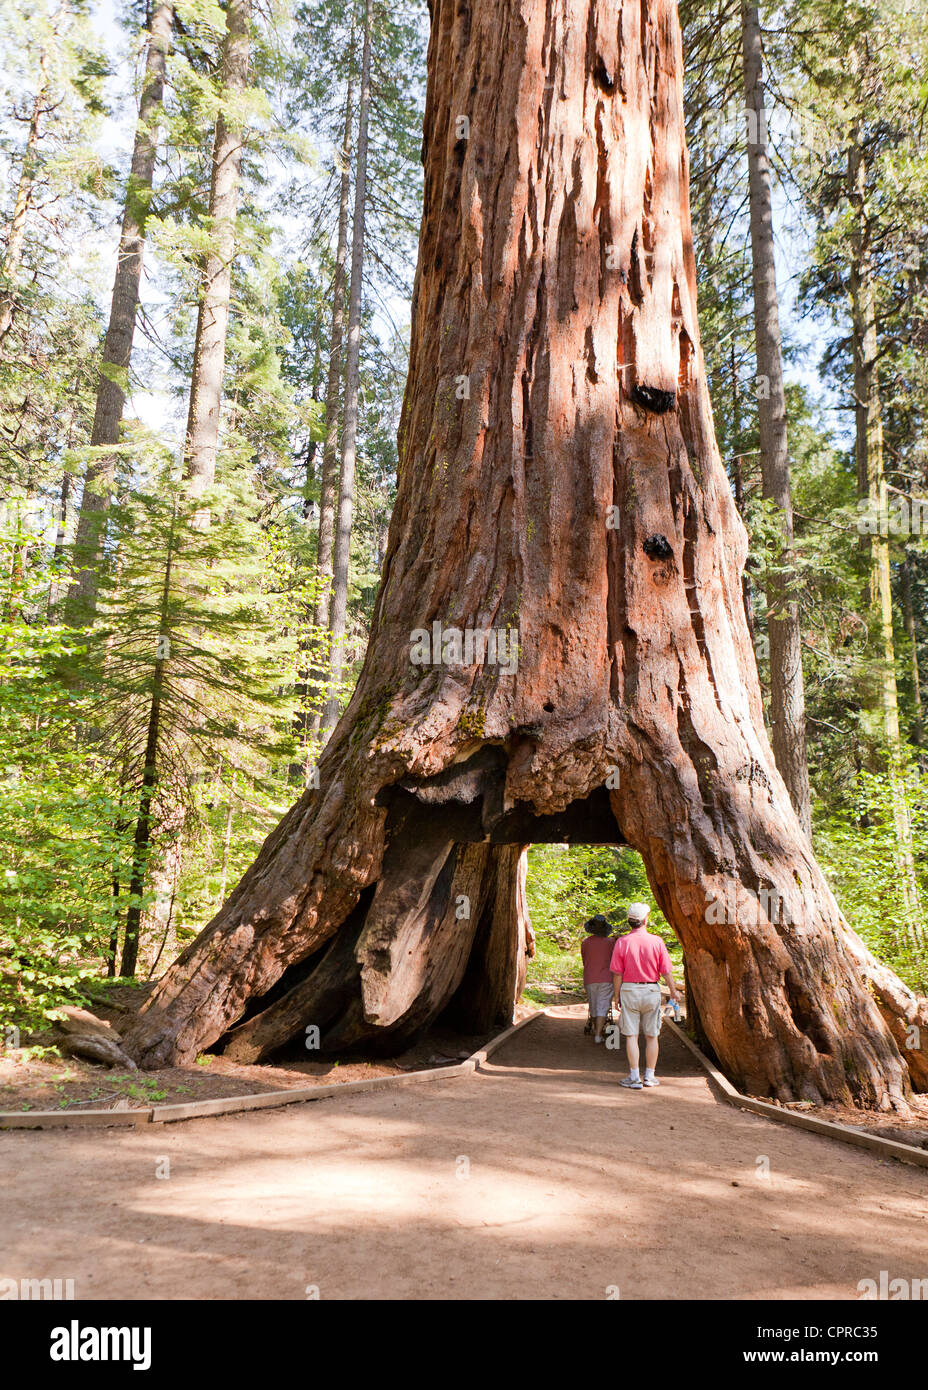 People walking through the giant sequoia Pioneer Cabin Tree - Calaveras Big Tree State Park, California USA Stock Photo